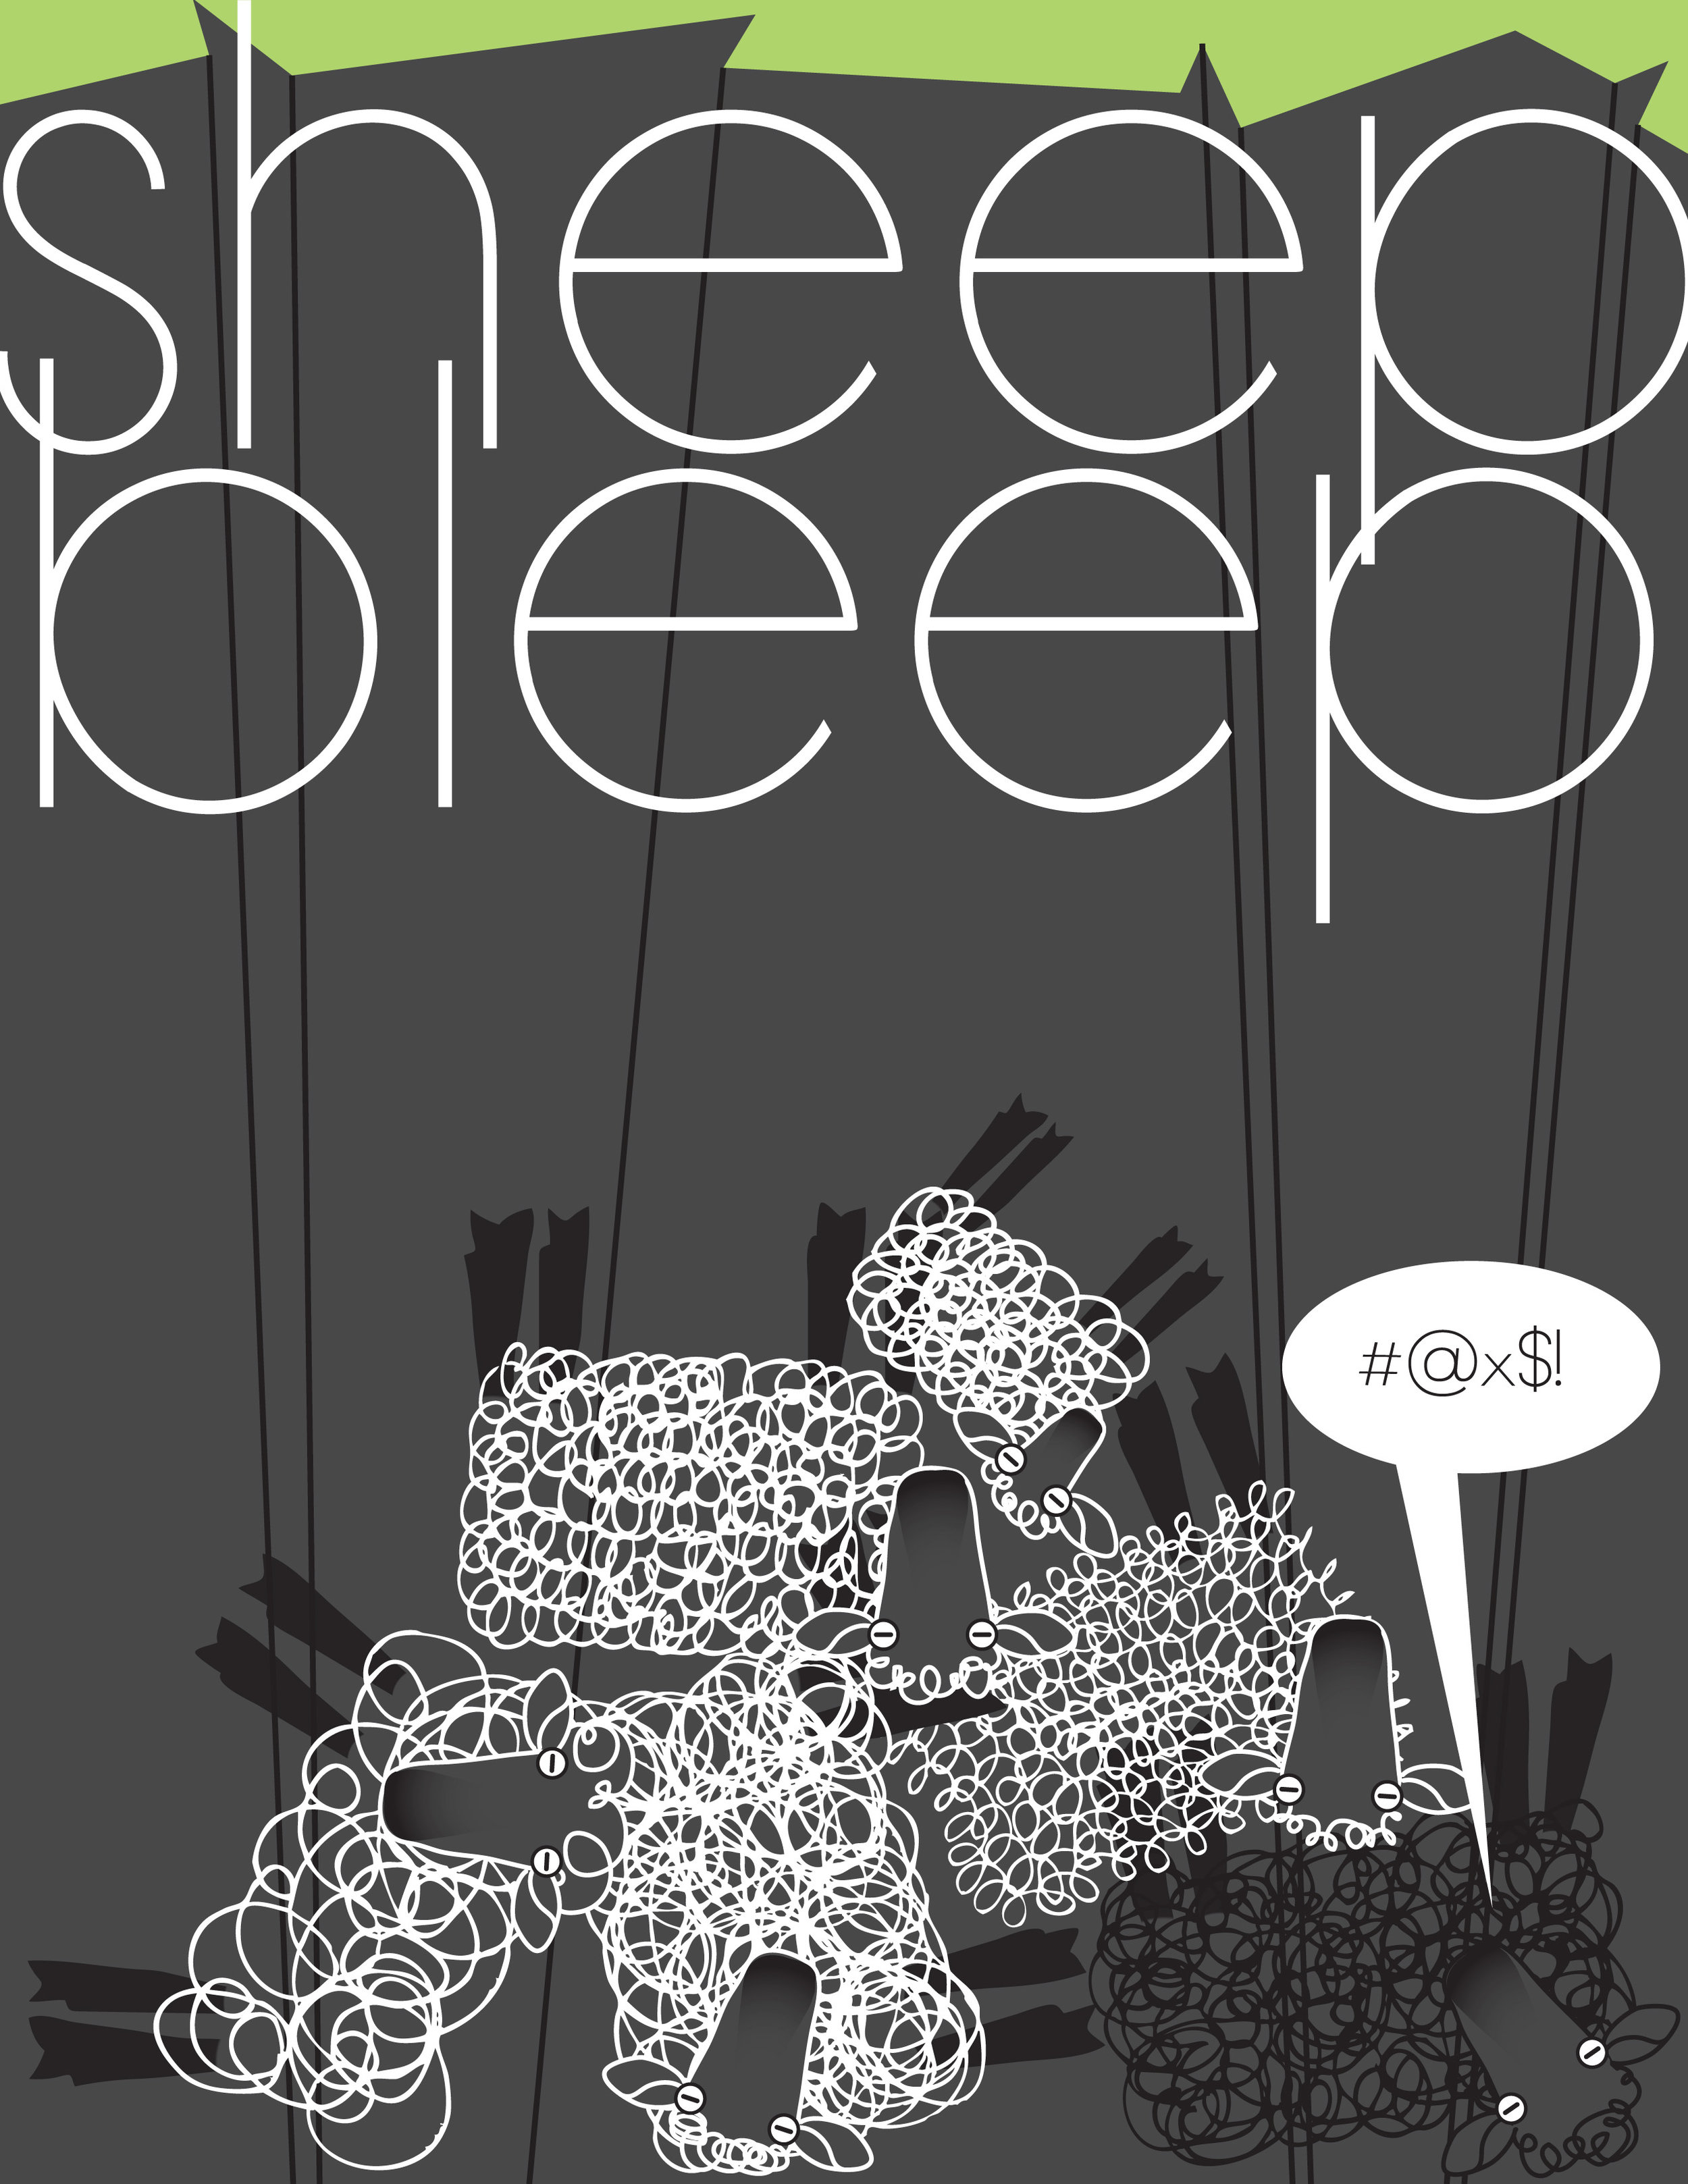 Sheep Sleep Book 2-8.jpg